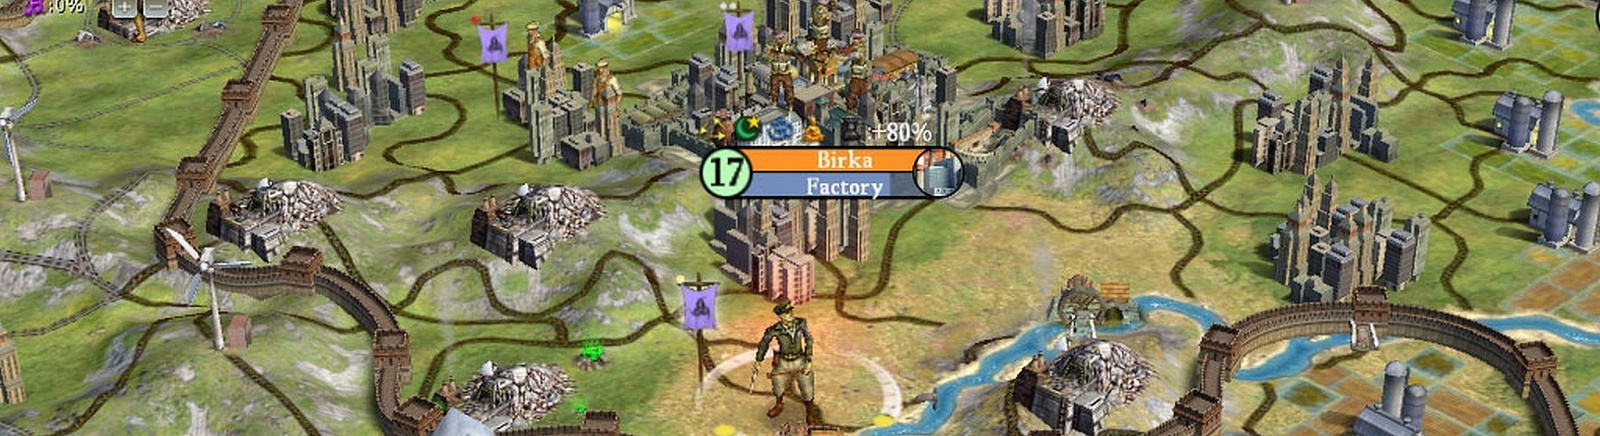 Дата выхода Sid Meier's Civilization 4: Warlords  на PC и Mac в России и во всем мире